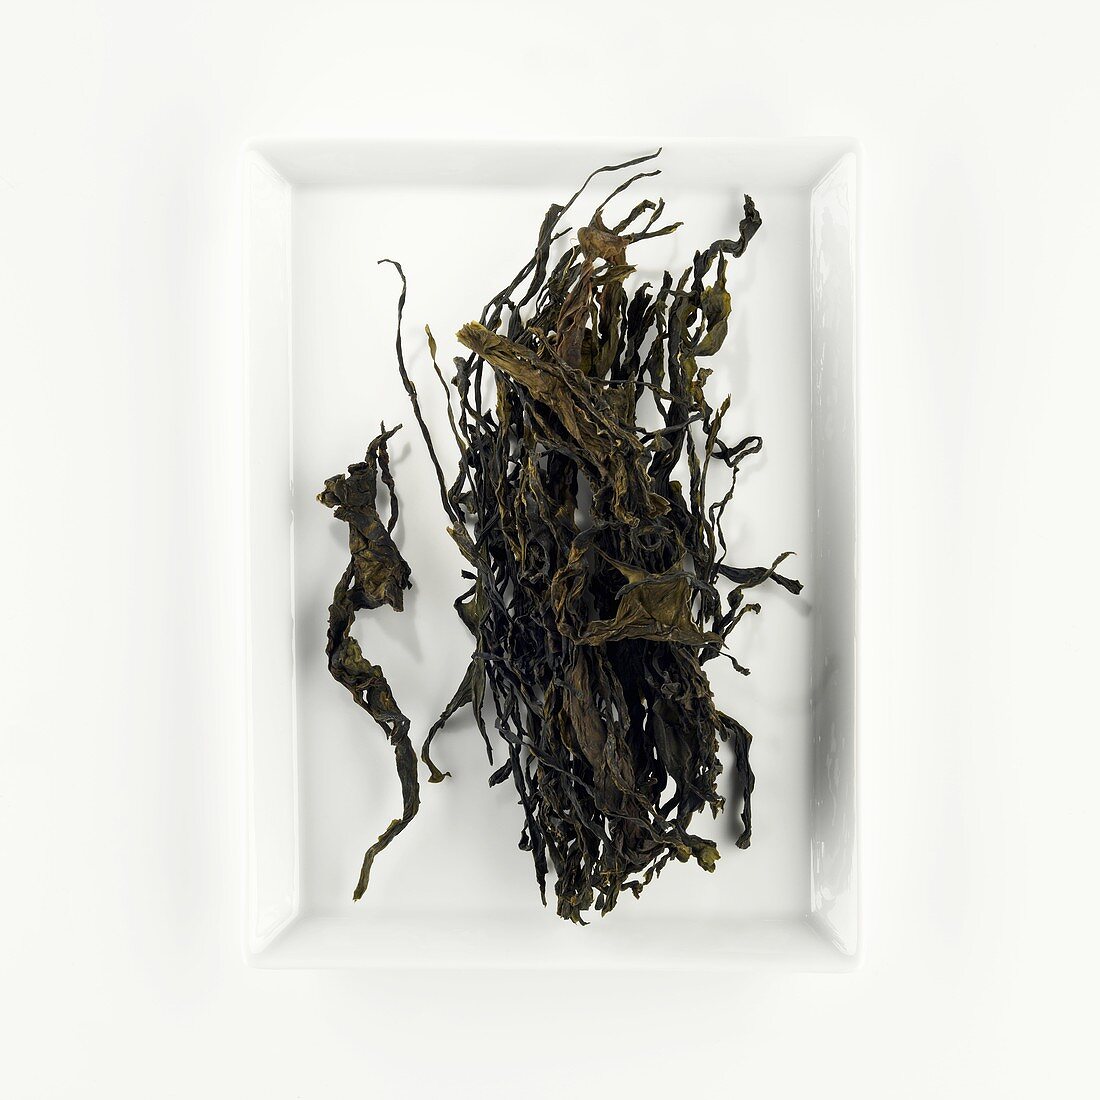 Dried seaweed strands